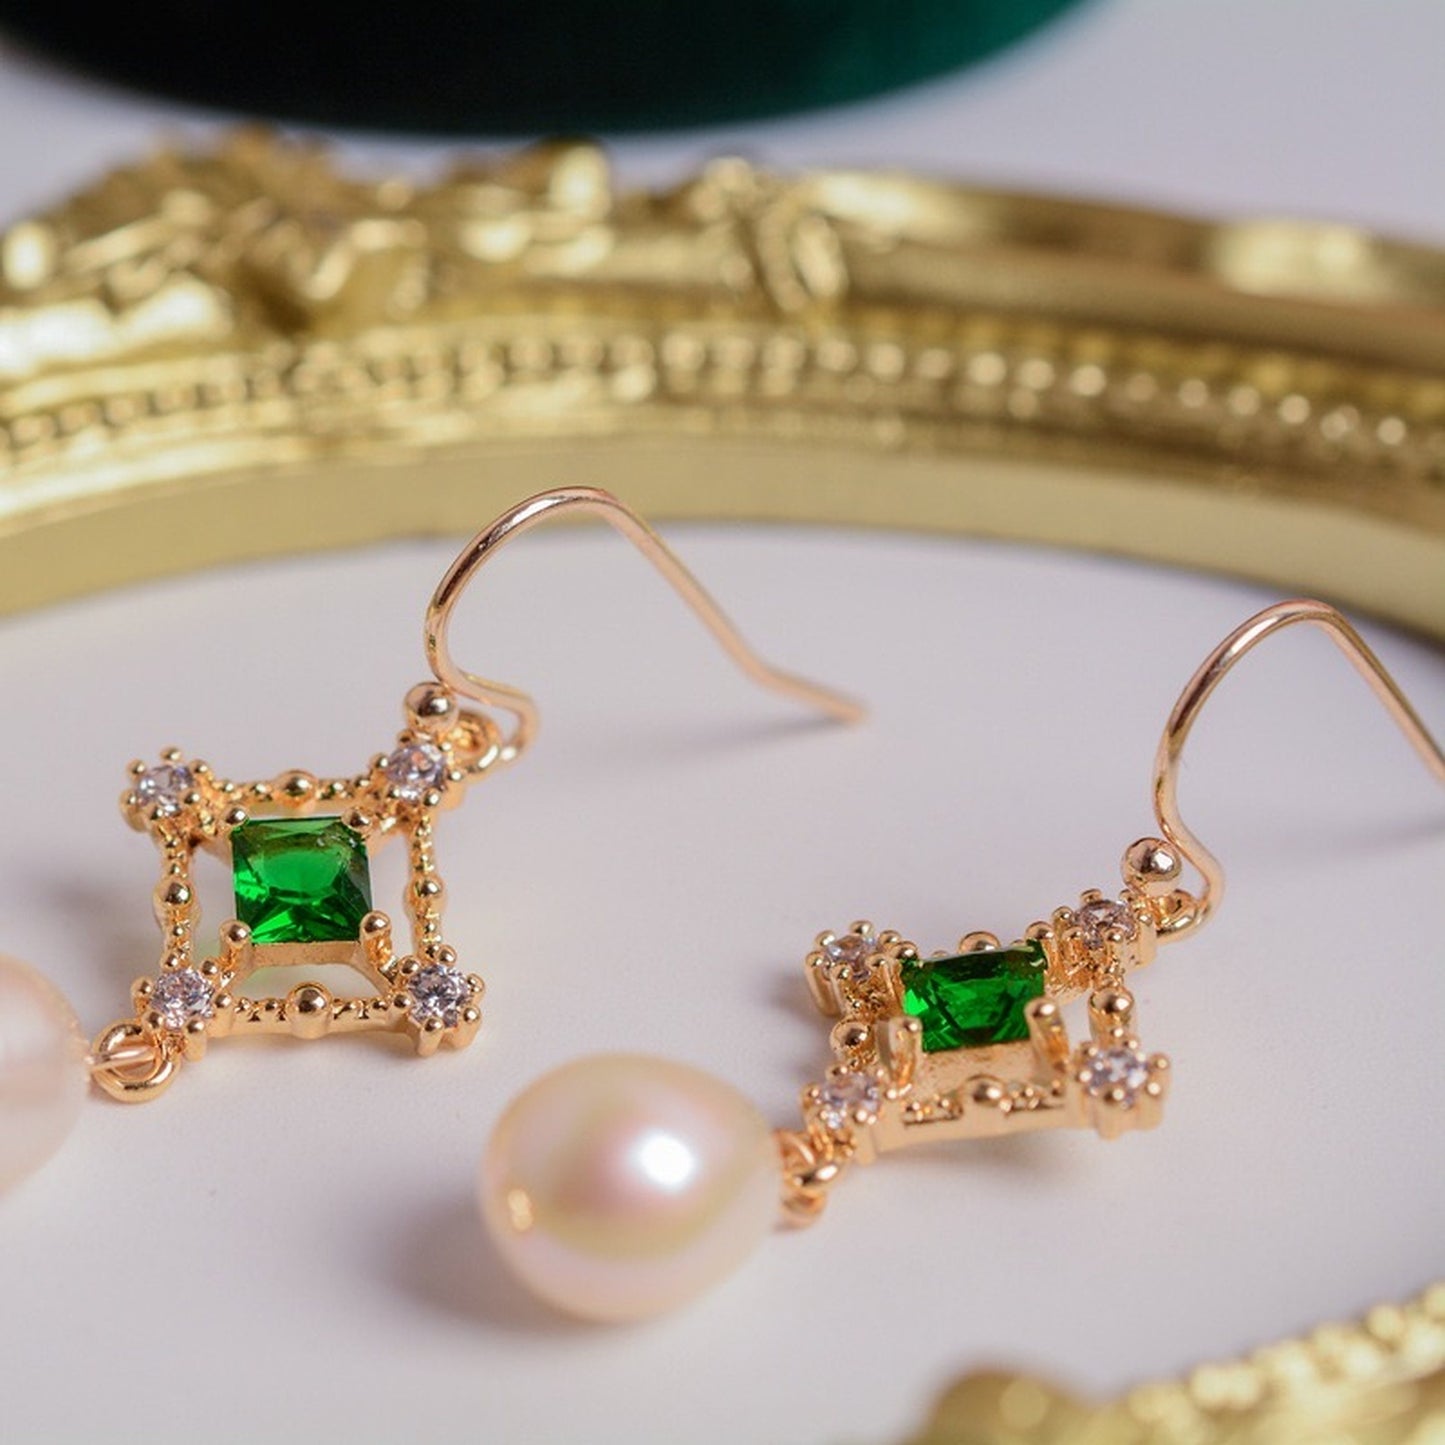 Emerald Natural Pearl Dangle Earrings, 14K Gold-filled Lace Earrings, Green Emerald Earrings, Bridesmaid Bridal Wedding Earrings, Gift Ideas